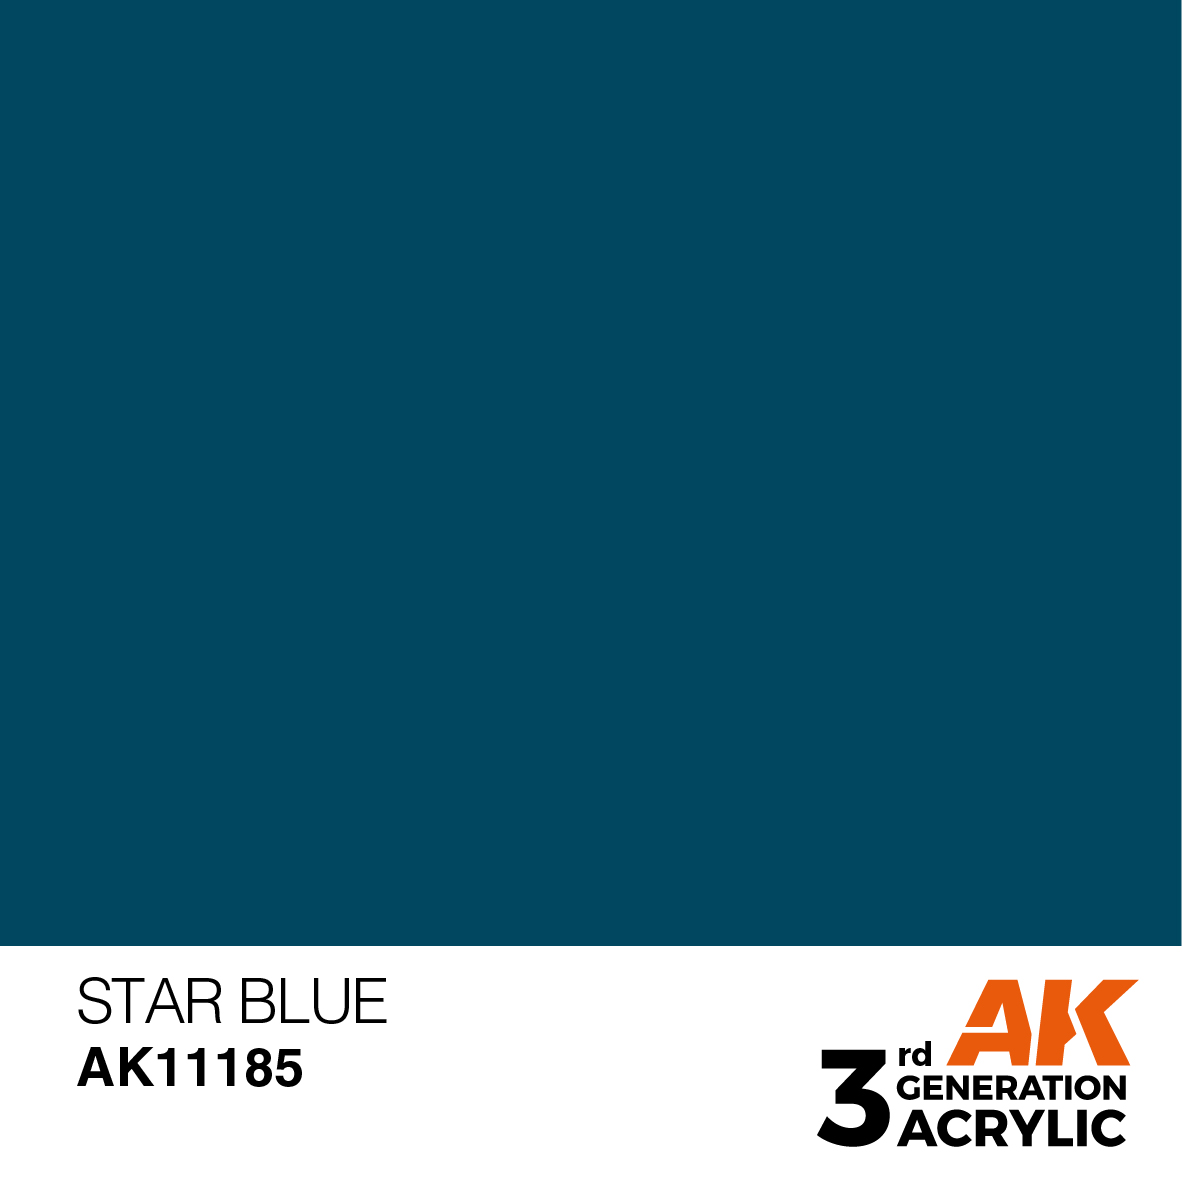 STAR BLUE – STANDARD